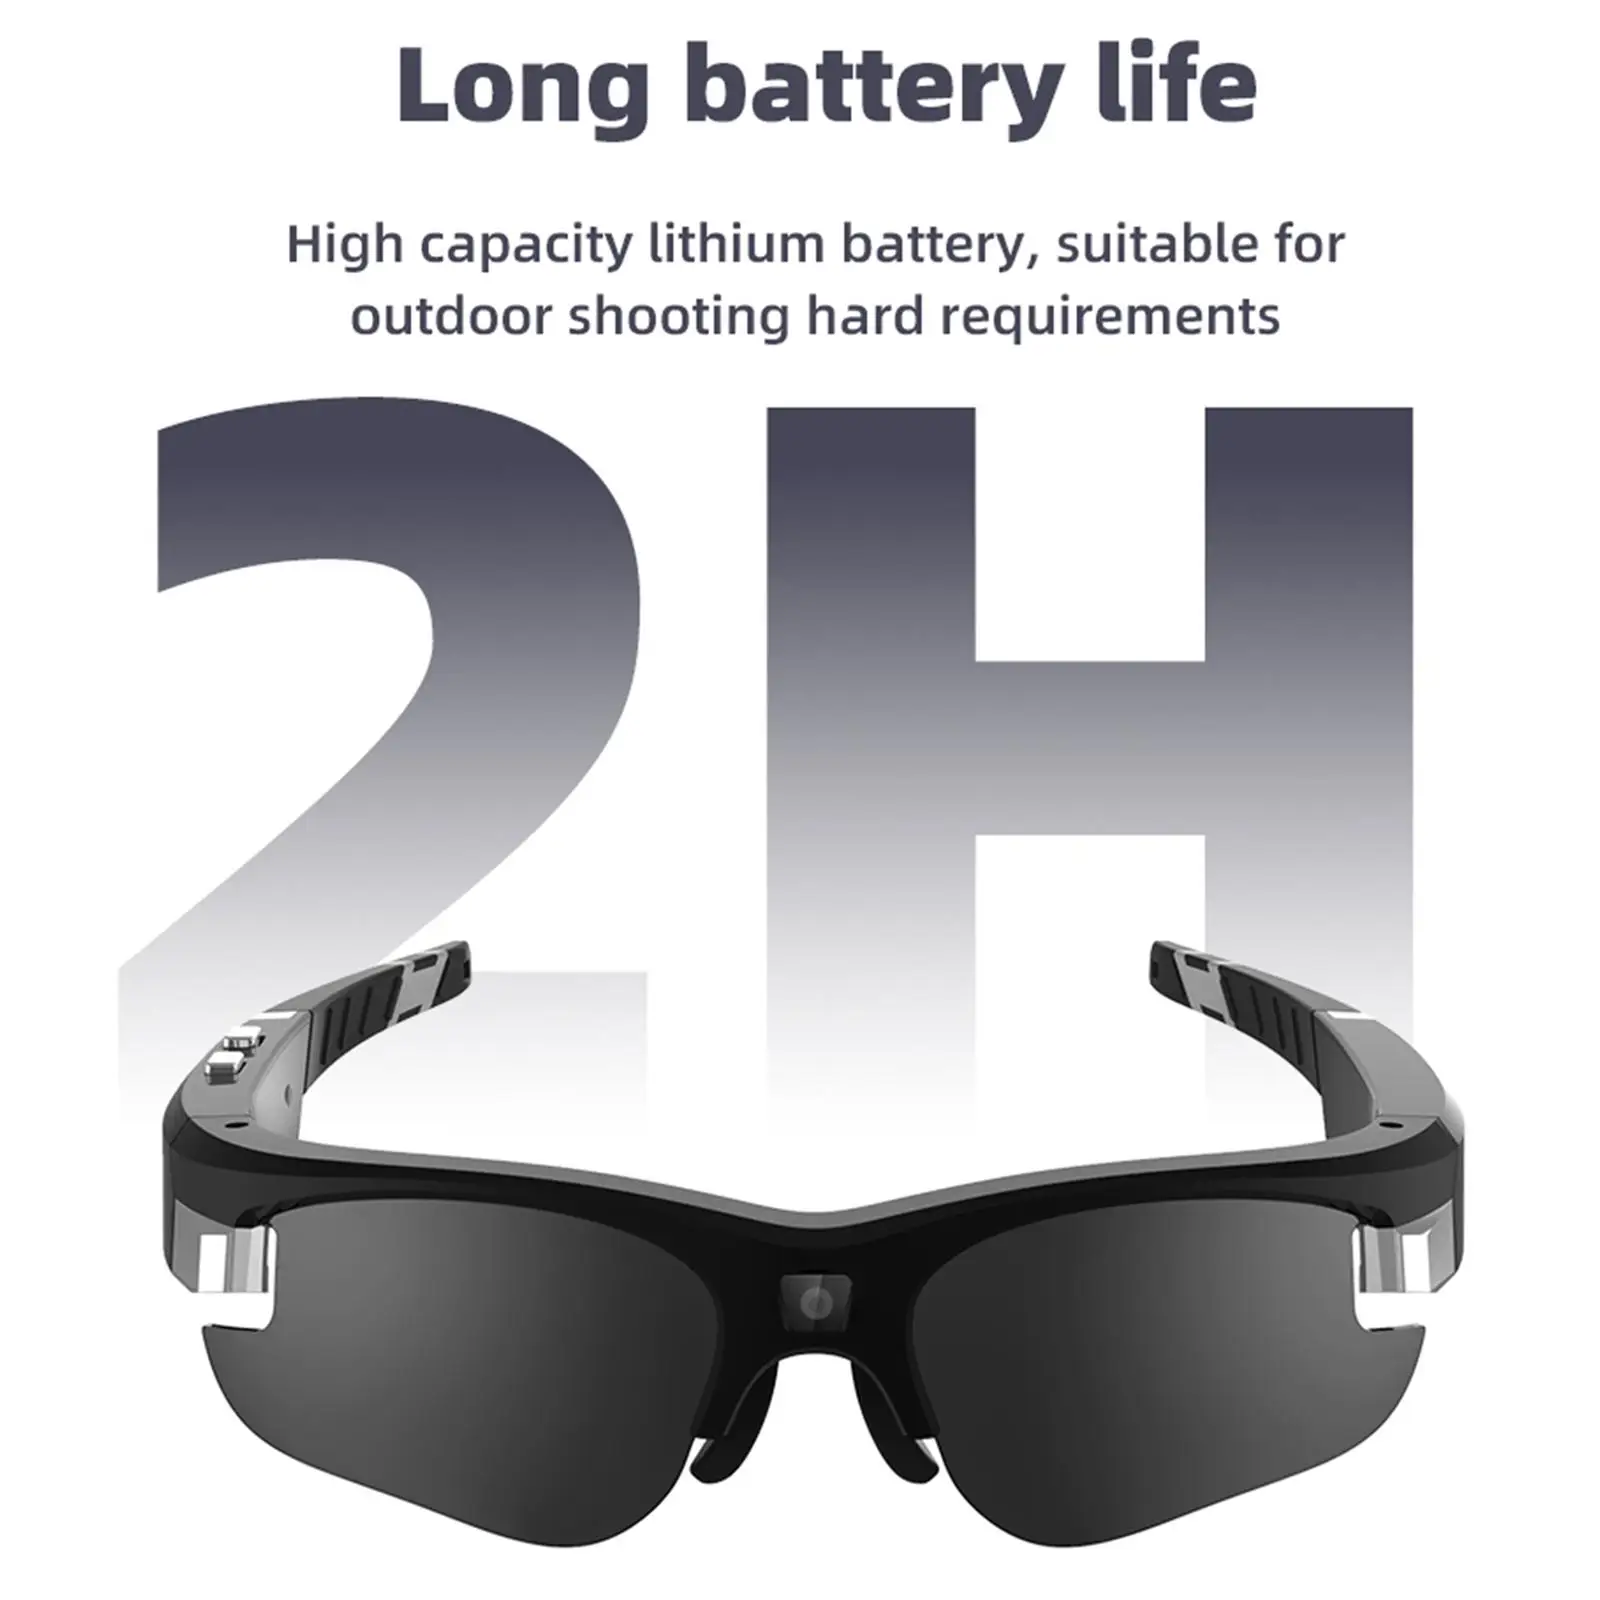 Video Camera Sunglasses 1080P HD 120° Wide Angle Lens Video Recording Sports Camera Glasses Smart Sunglasses for Outdoor Sports